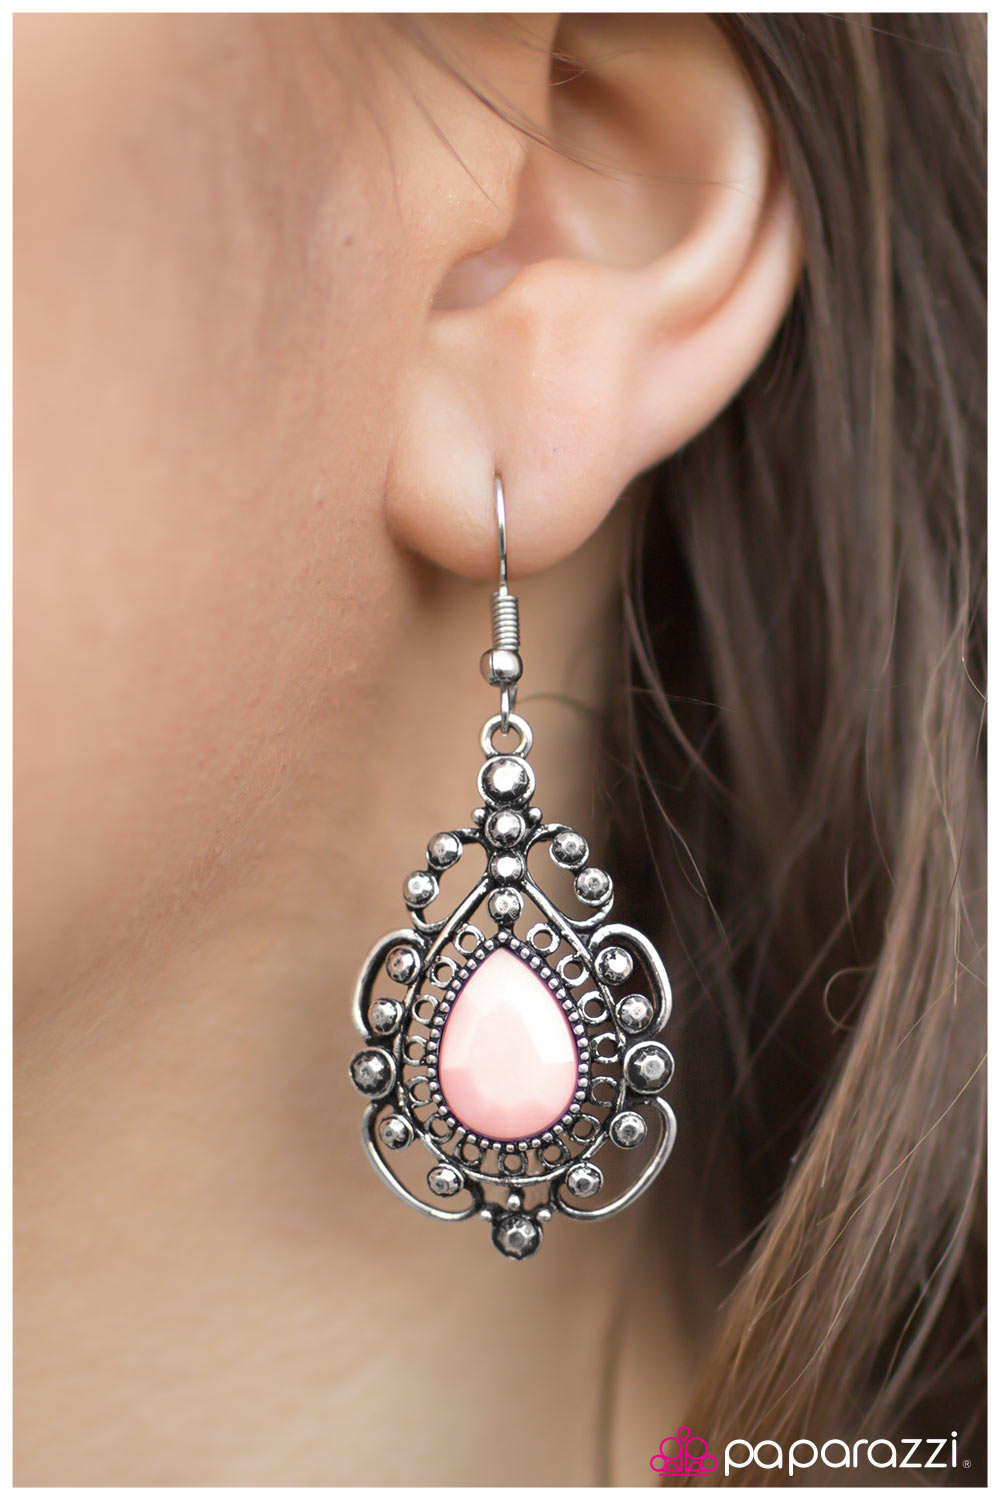 The Heir - Paparazzi earrings